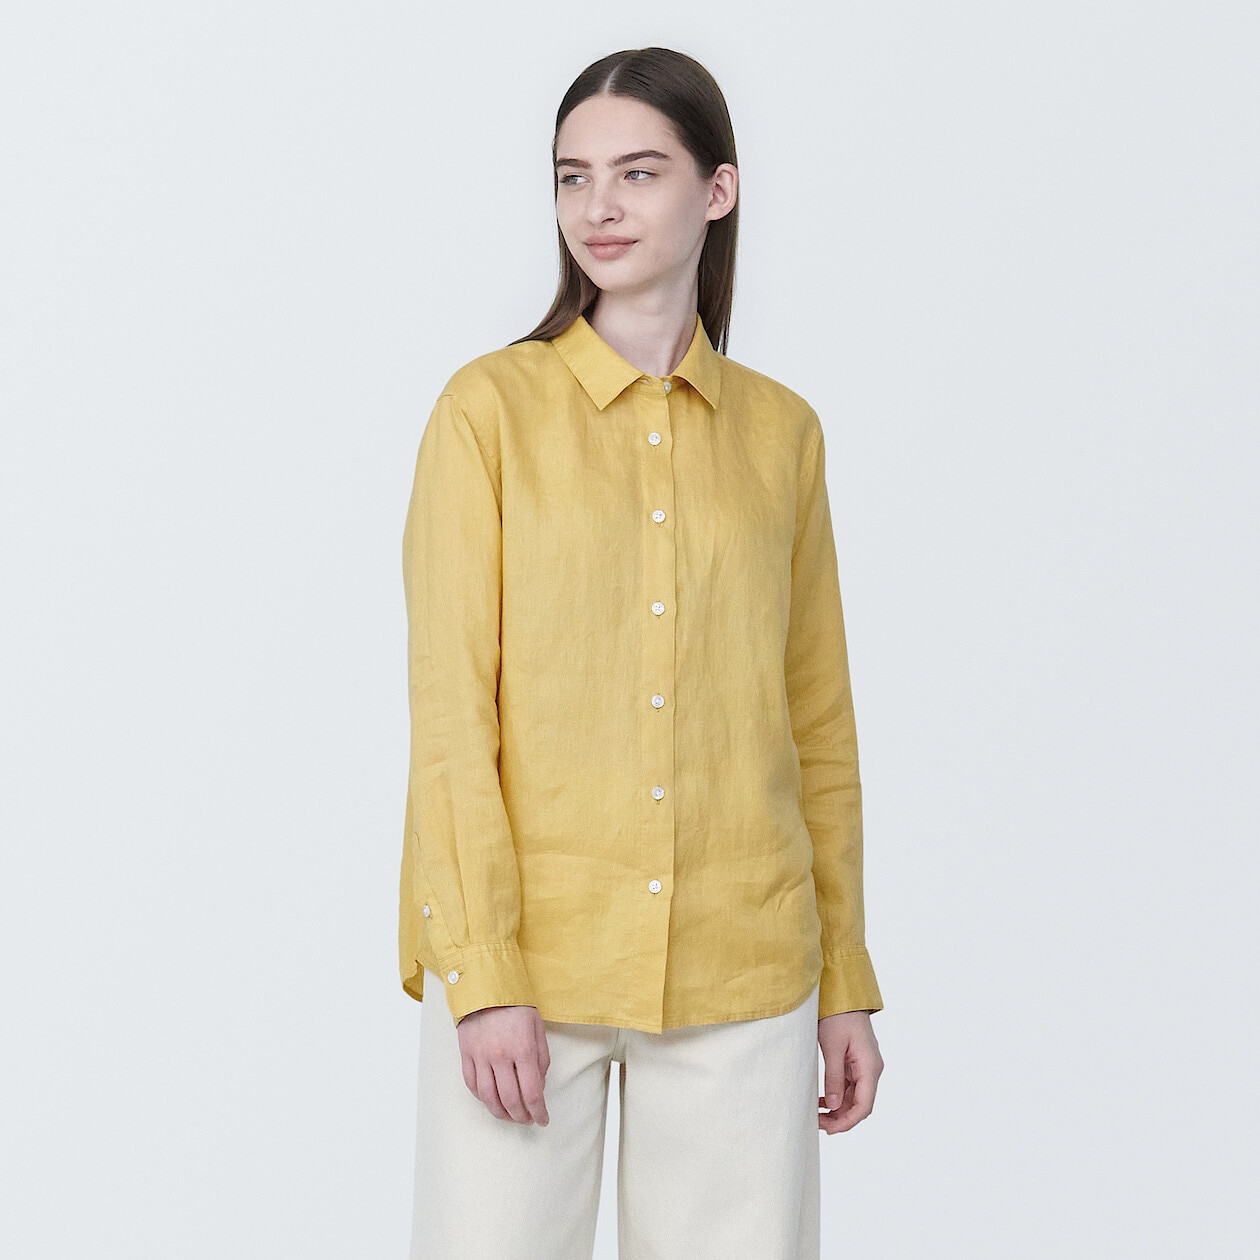 Koszula lniana żółta